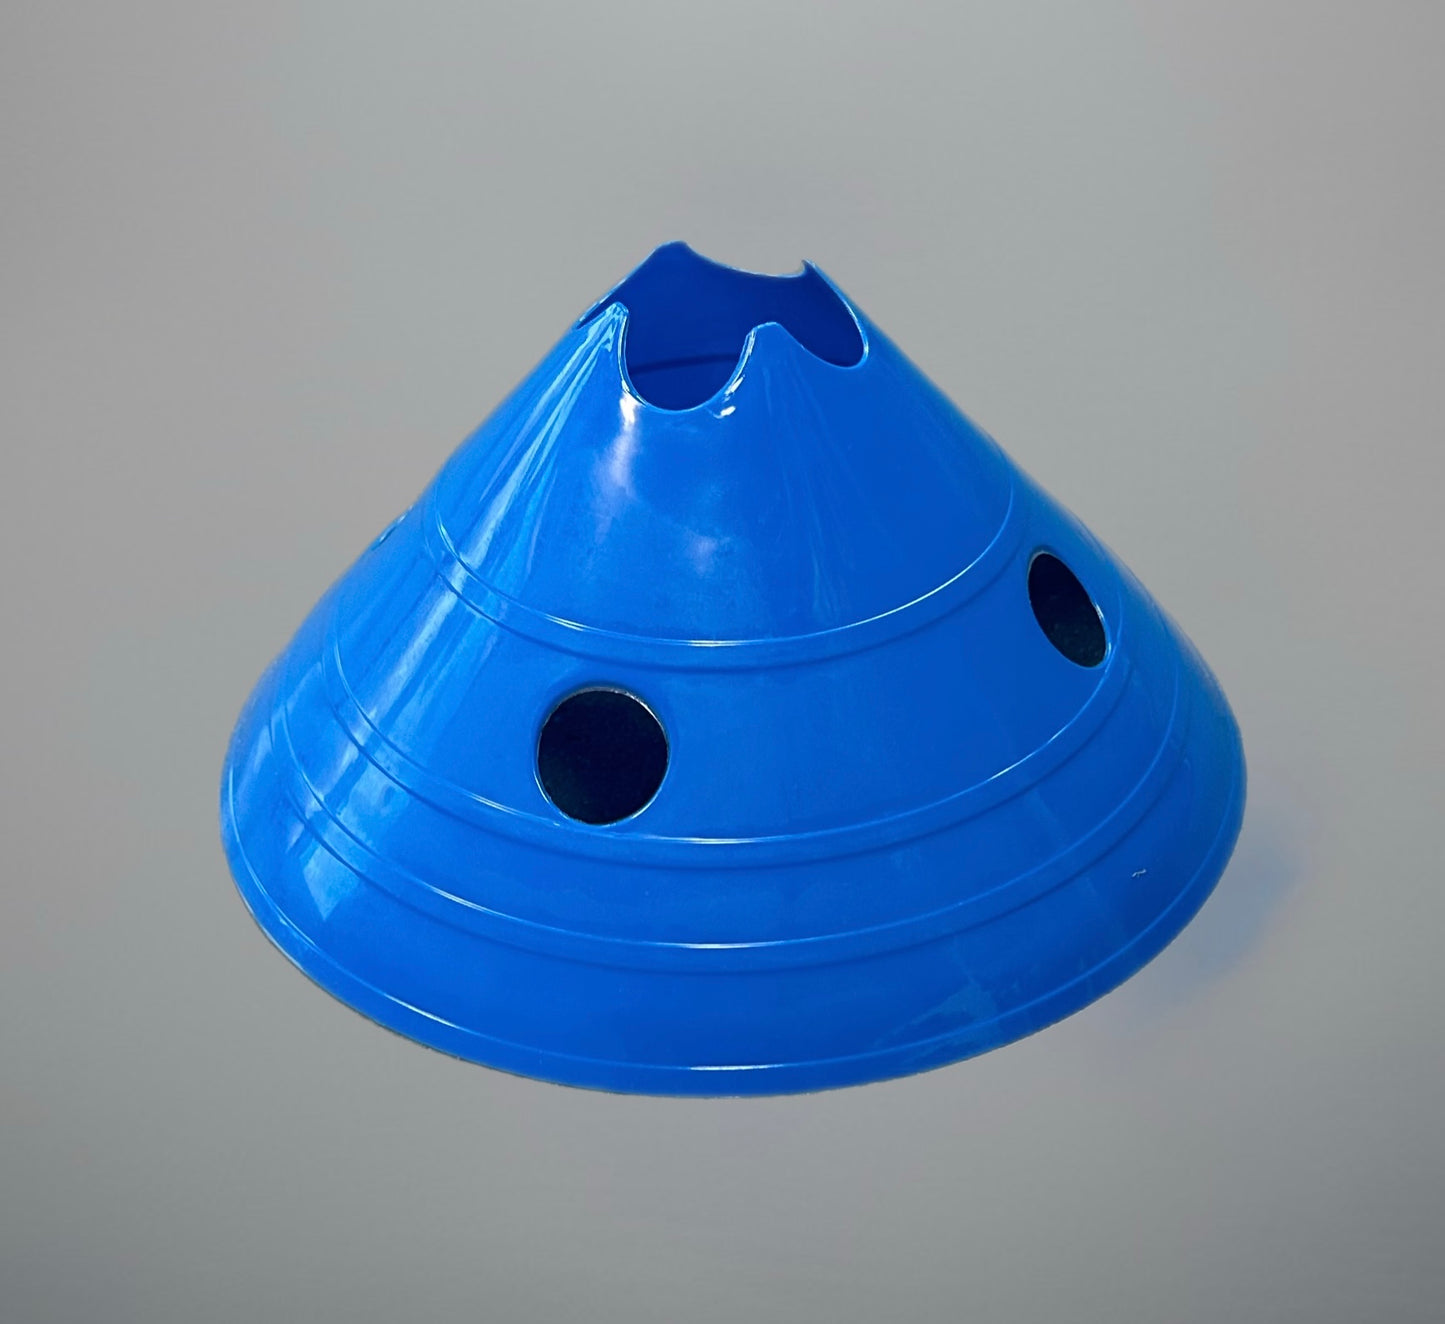 Jumbo Cones with hurdle holes